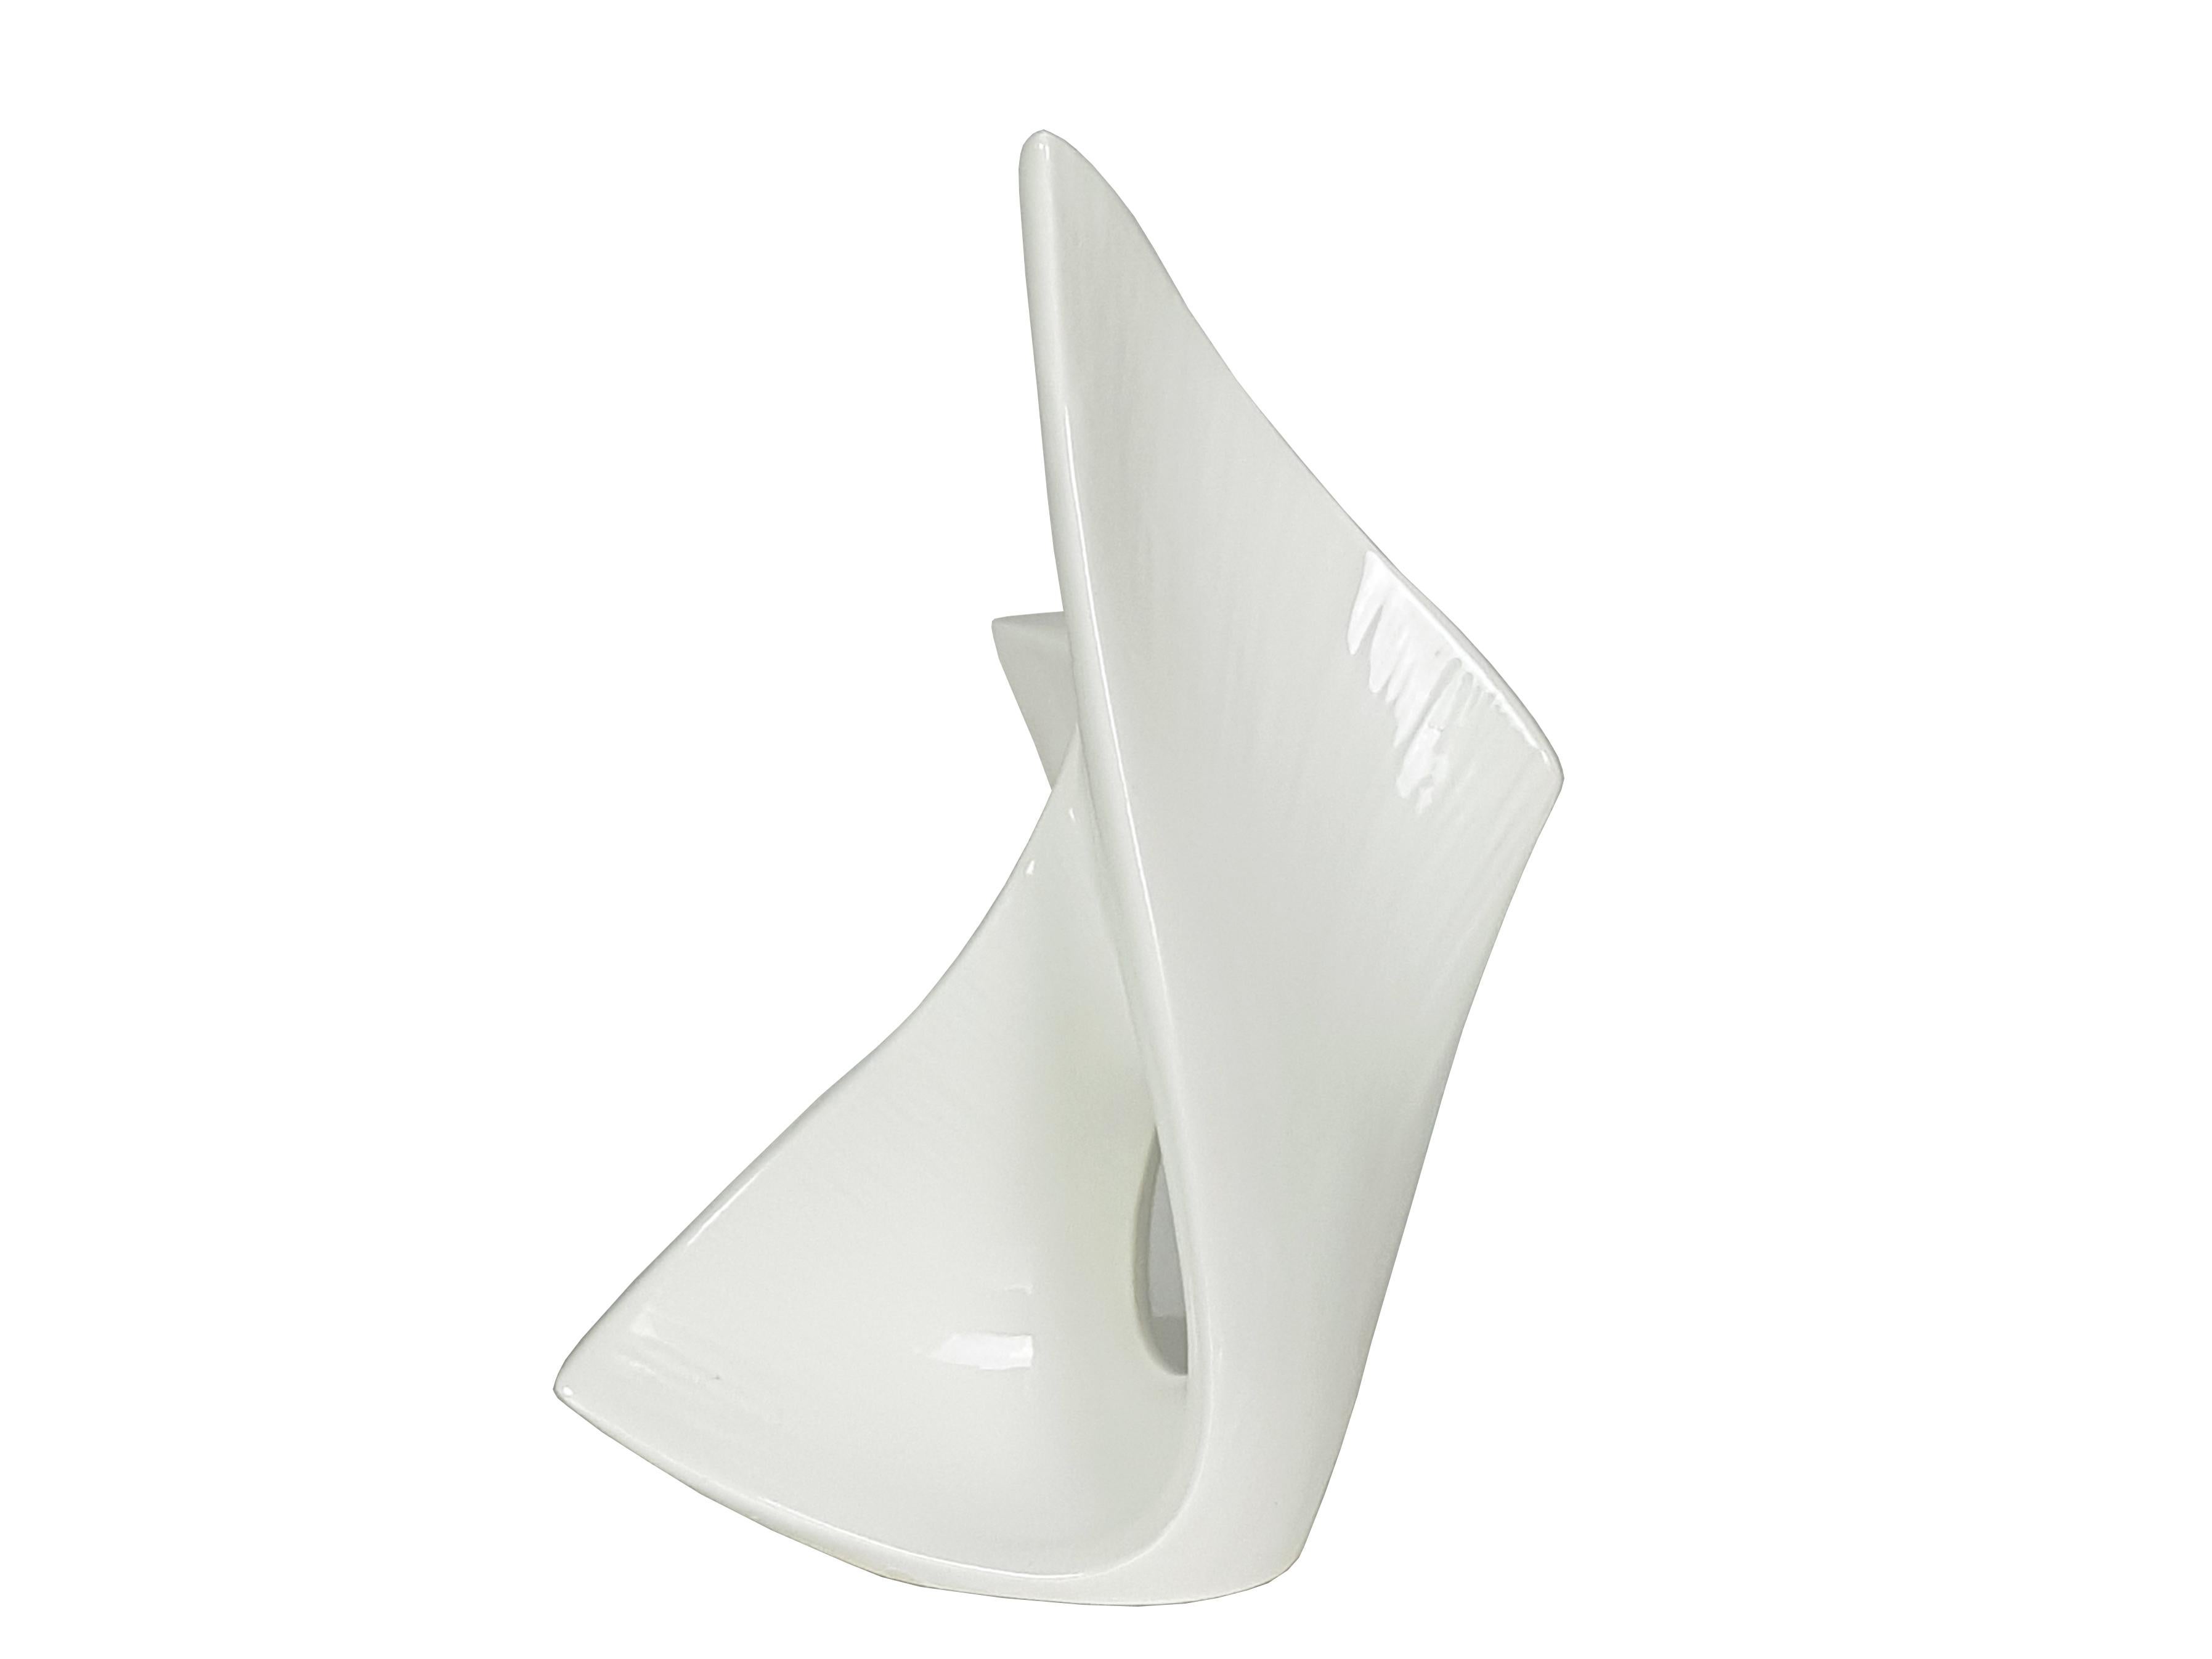 Mid-20th Century Italian Sculptural White Ceramic Vase from Vibi, 1950s For Sale